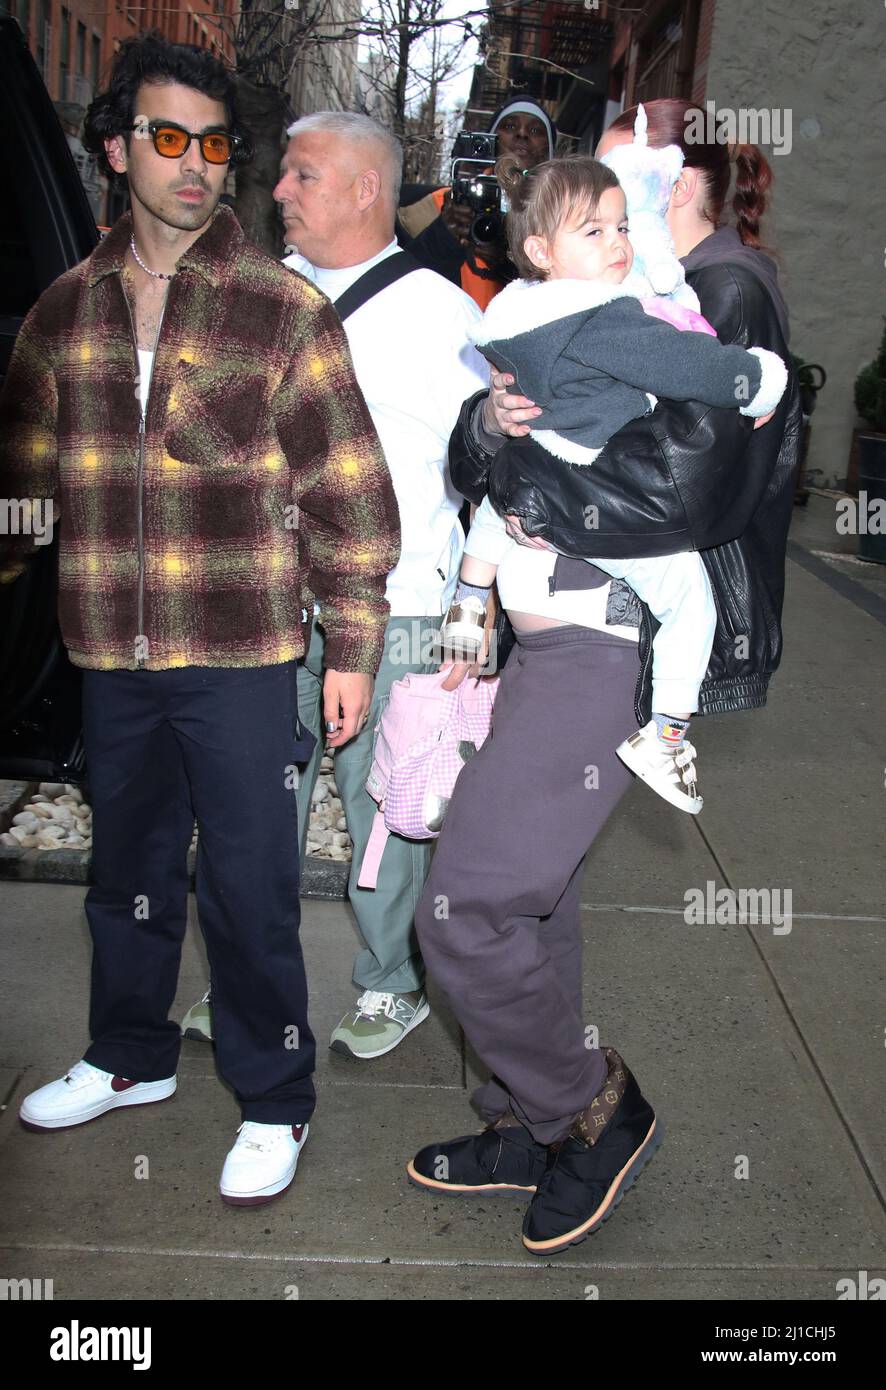 New York, NY, USA. 24th Mar, 2022. Joe Jonas and Sophie Turner with baby  Willa Jonas seen in Soho on March 24, 2022 in New York City. Credit:  Rw/Media Punch/Alamy Live News